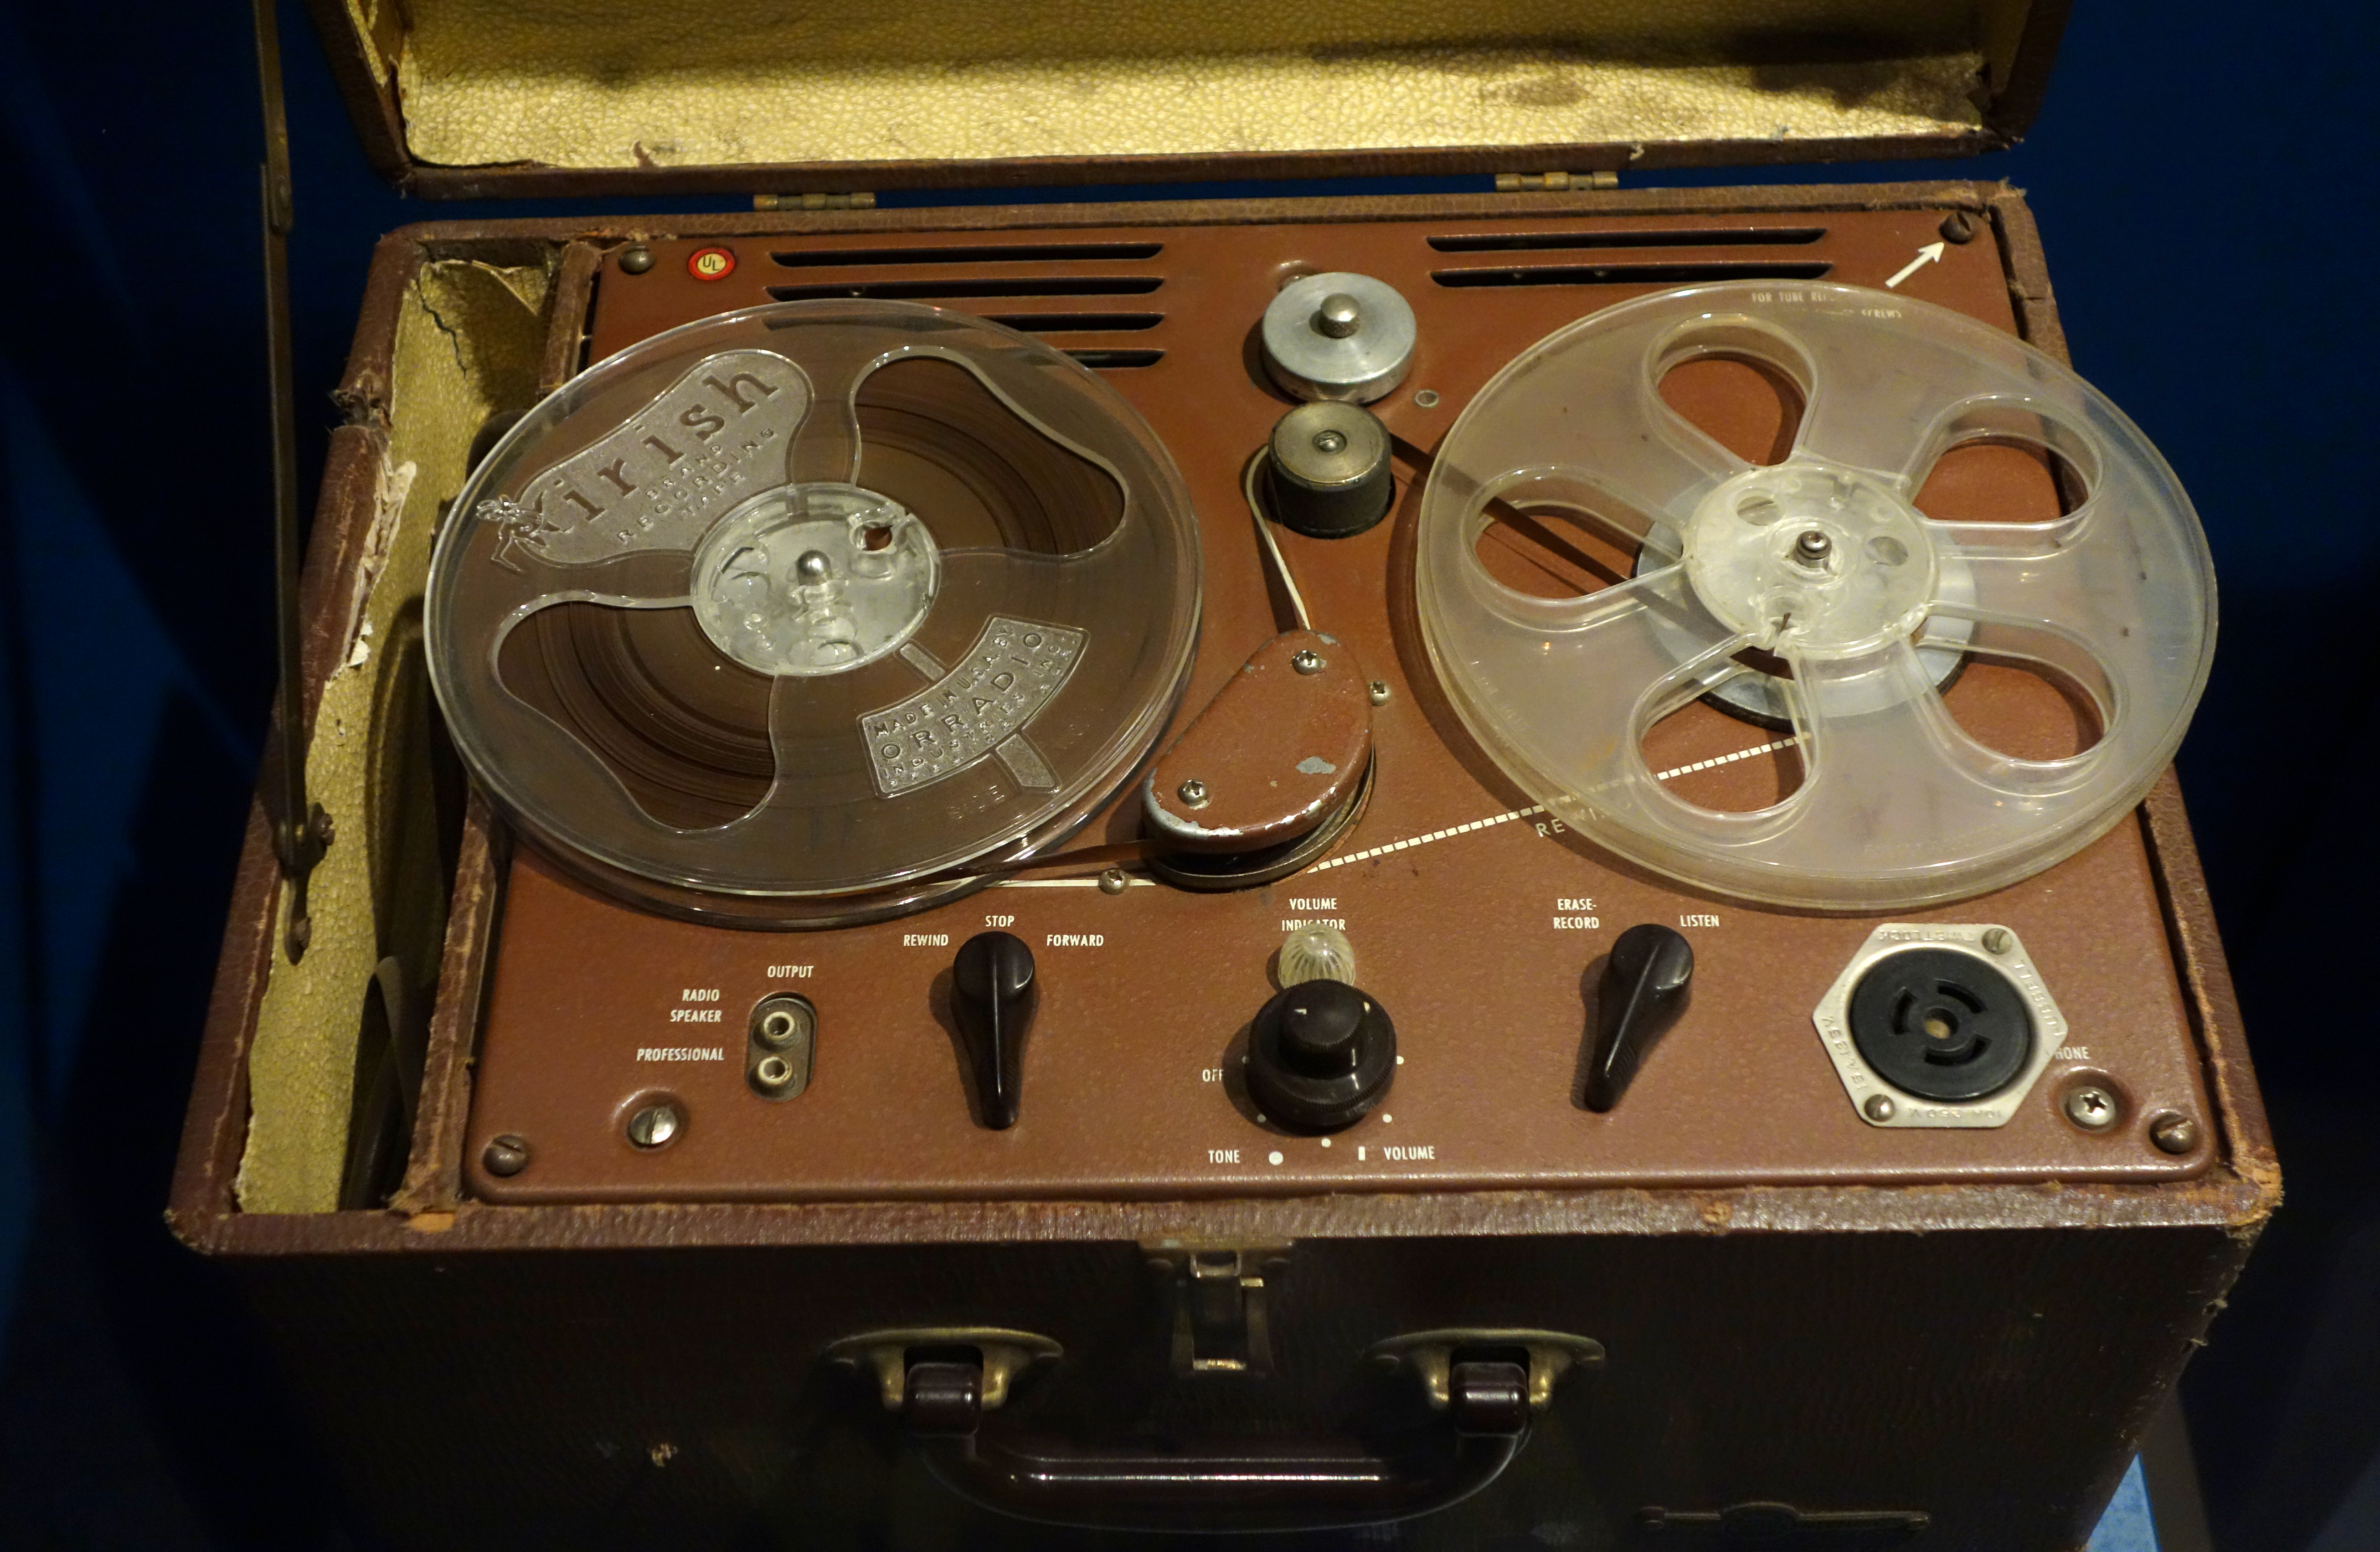 1960s tape recorder